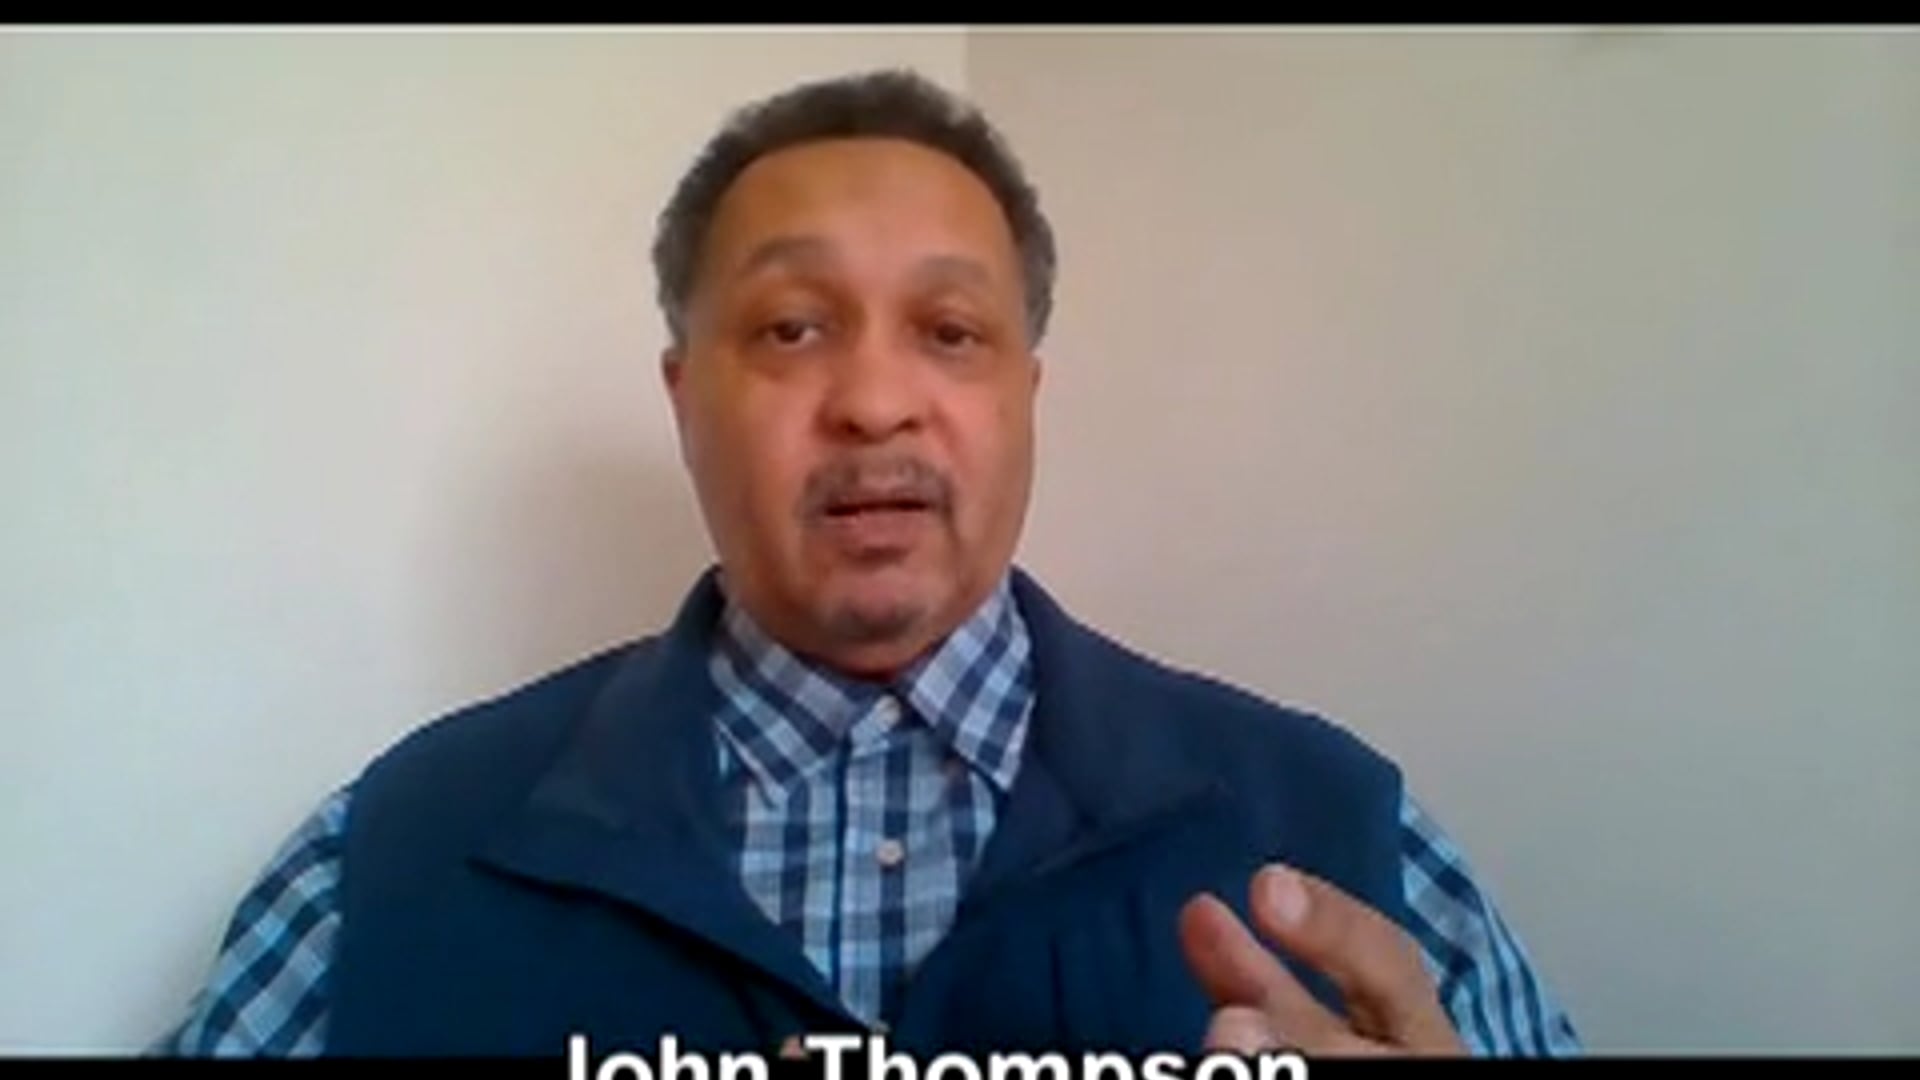 Life Coach Certification Testimonial - John Thompson